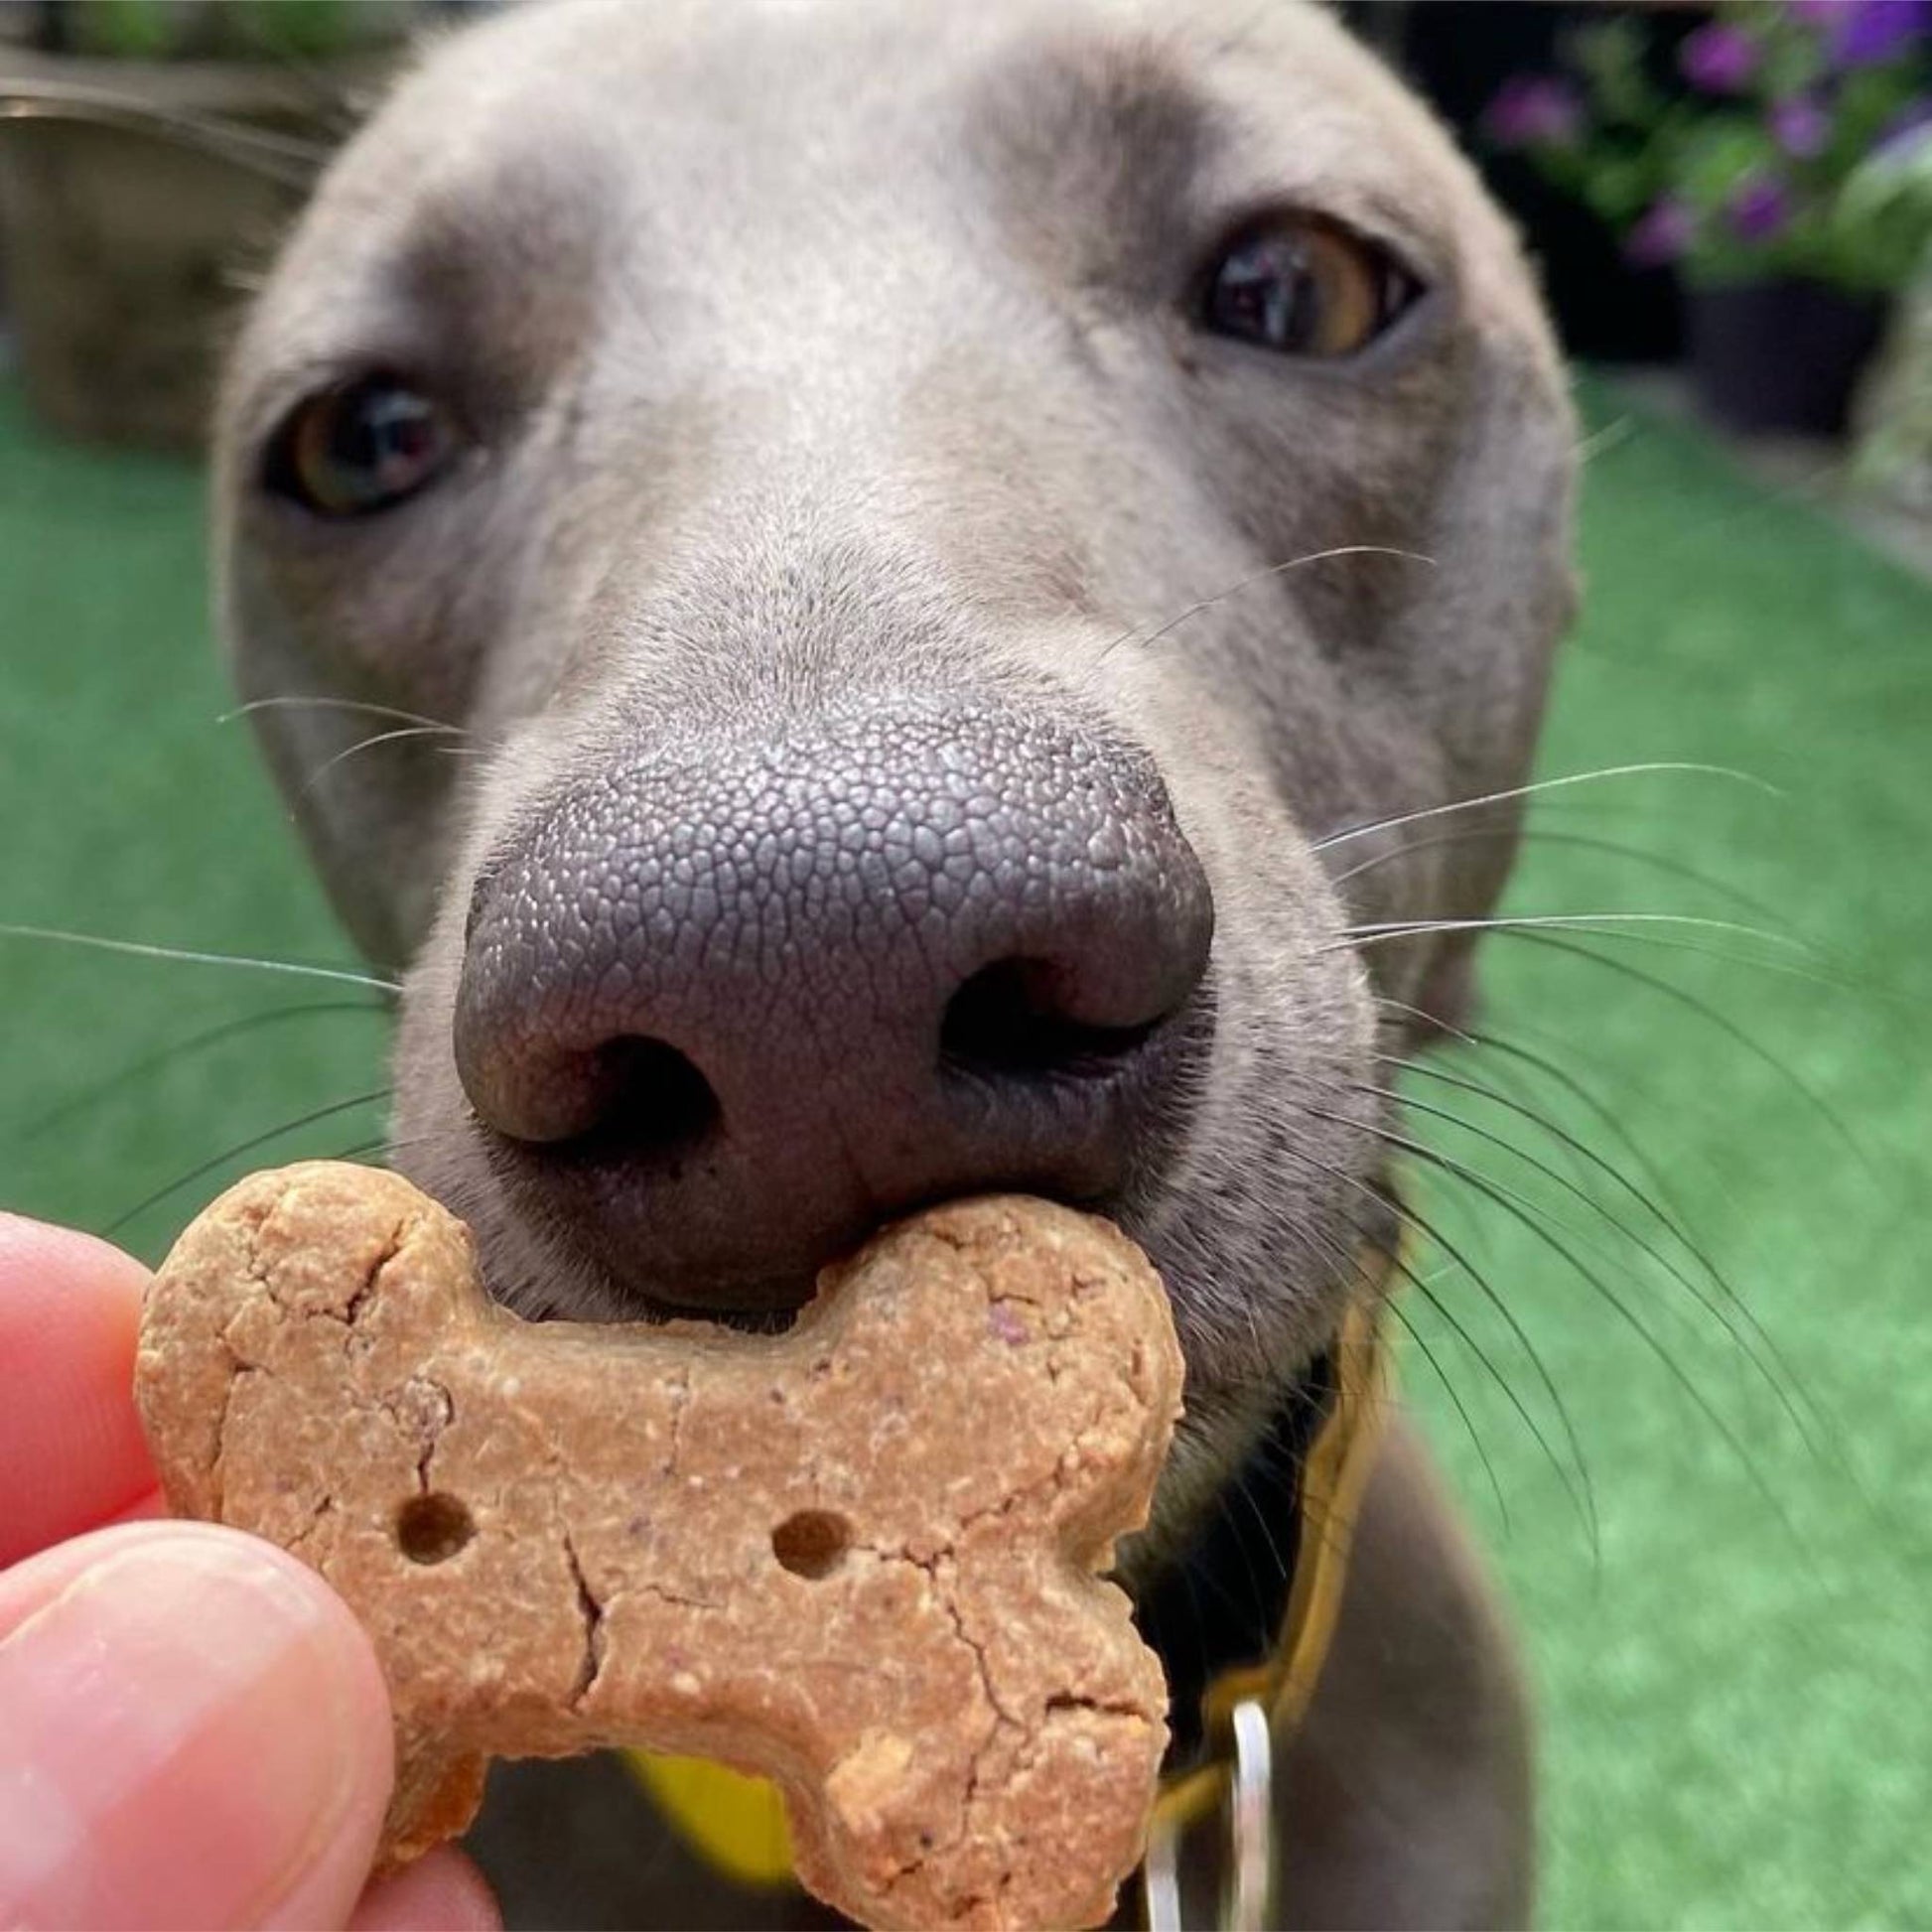 Dog eating biscuit bite